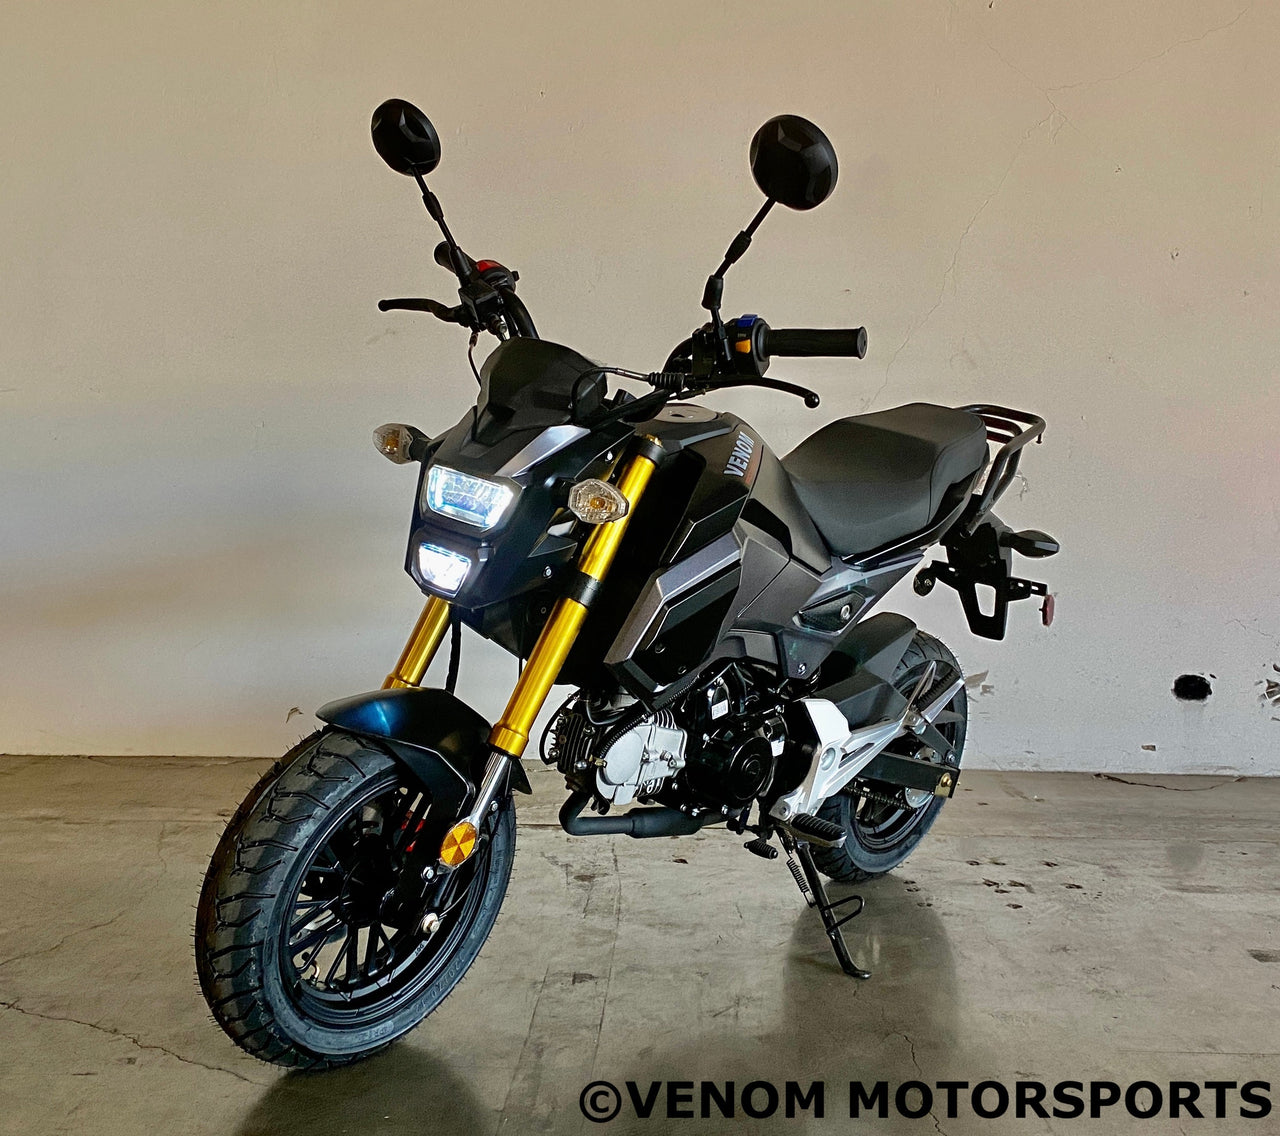 Venom X20 125cc Gen II motorcycle - black